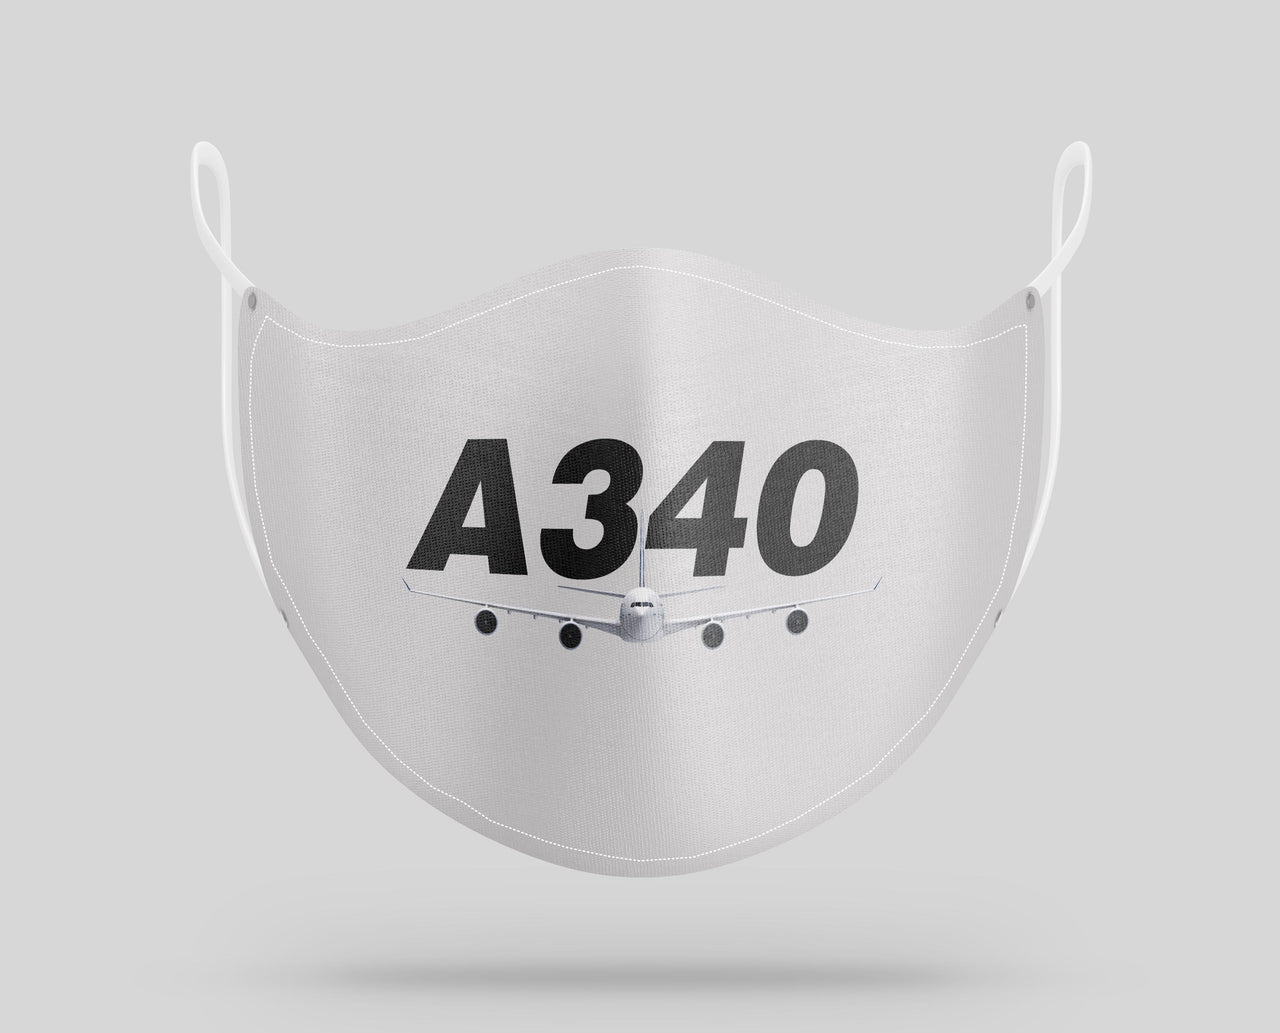 Super Airbus A340 Designed Face Masks